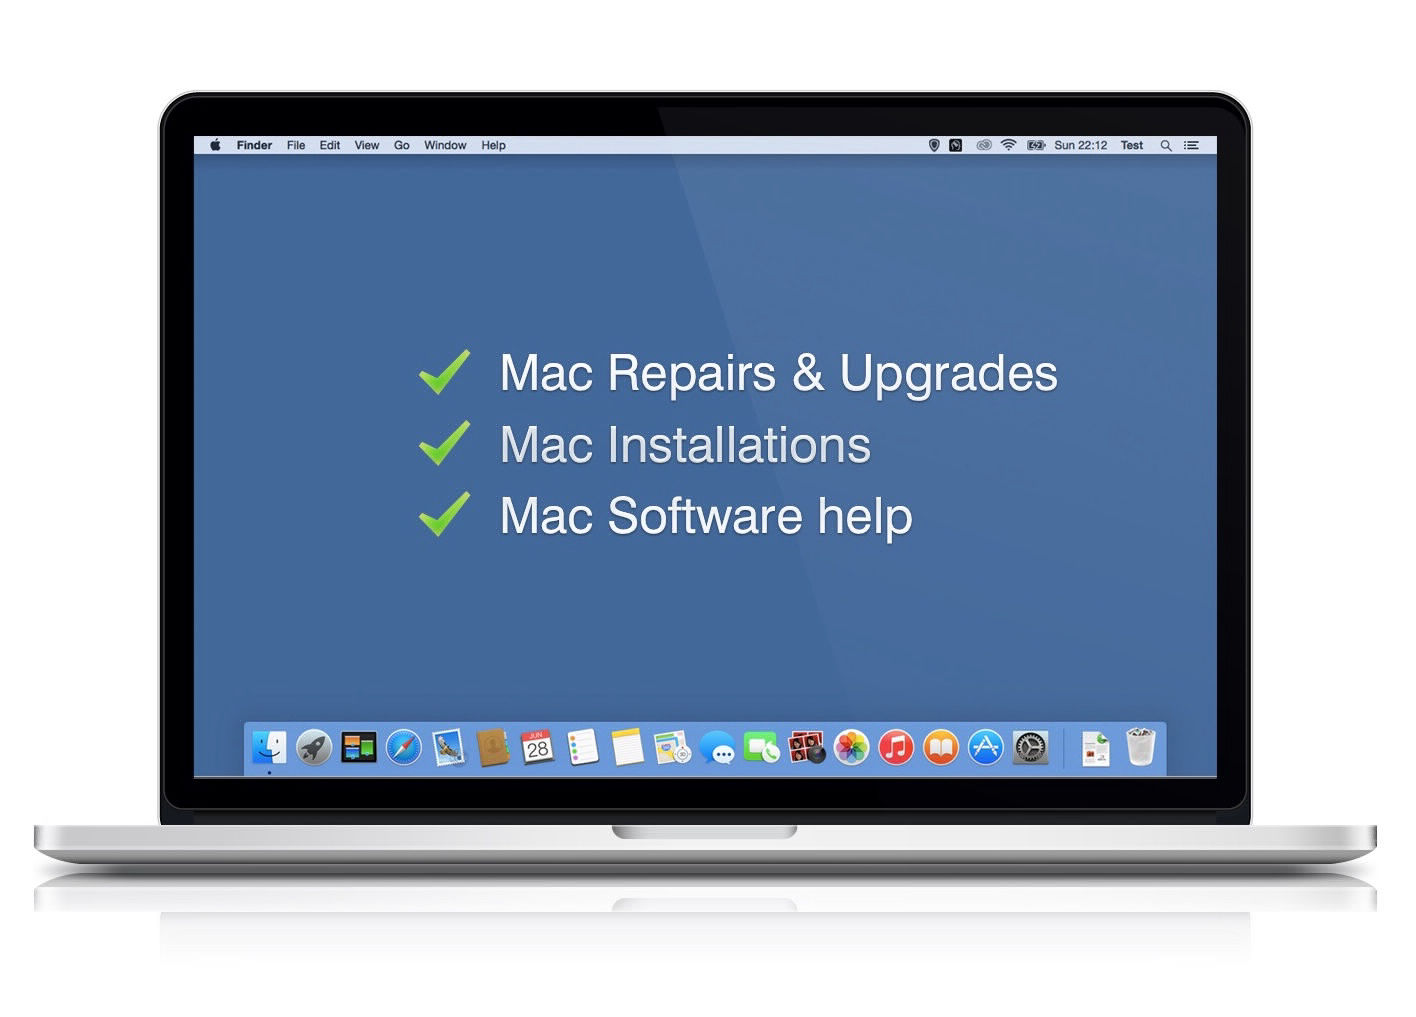 Macbook repair and upgrade services